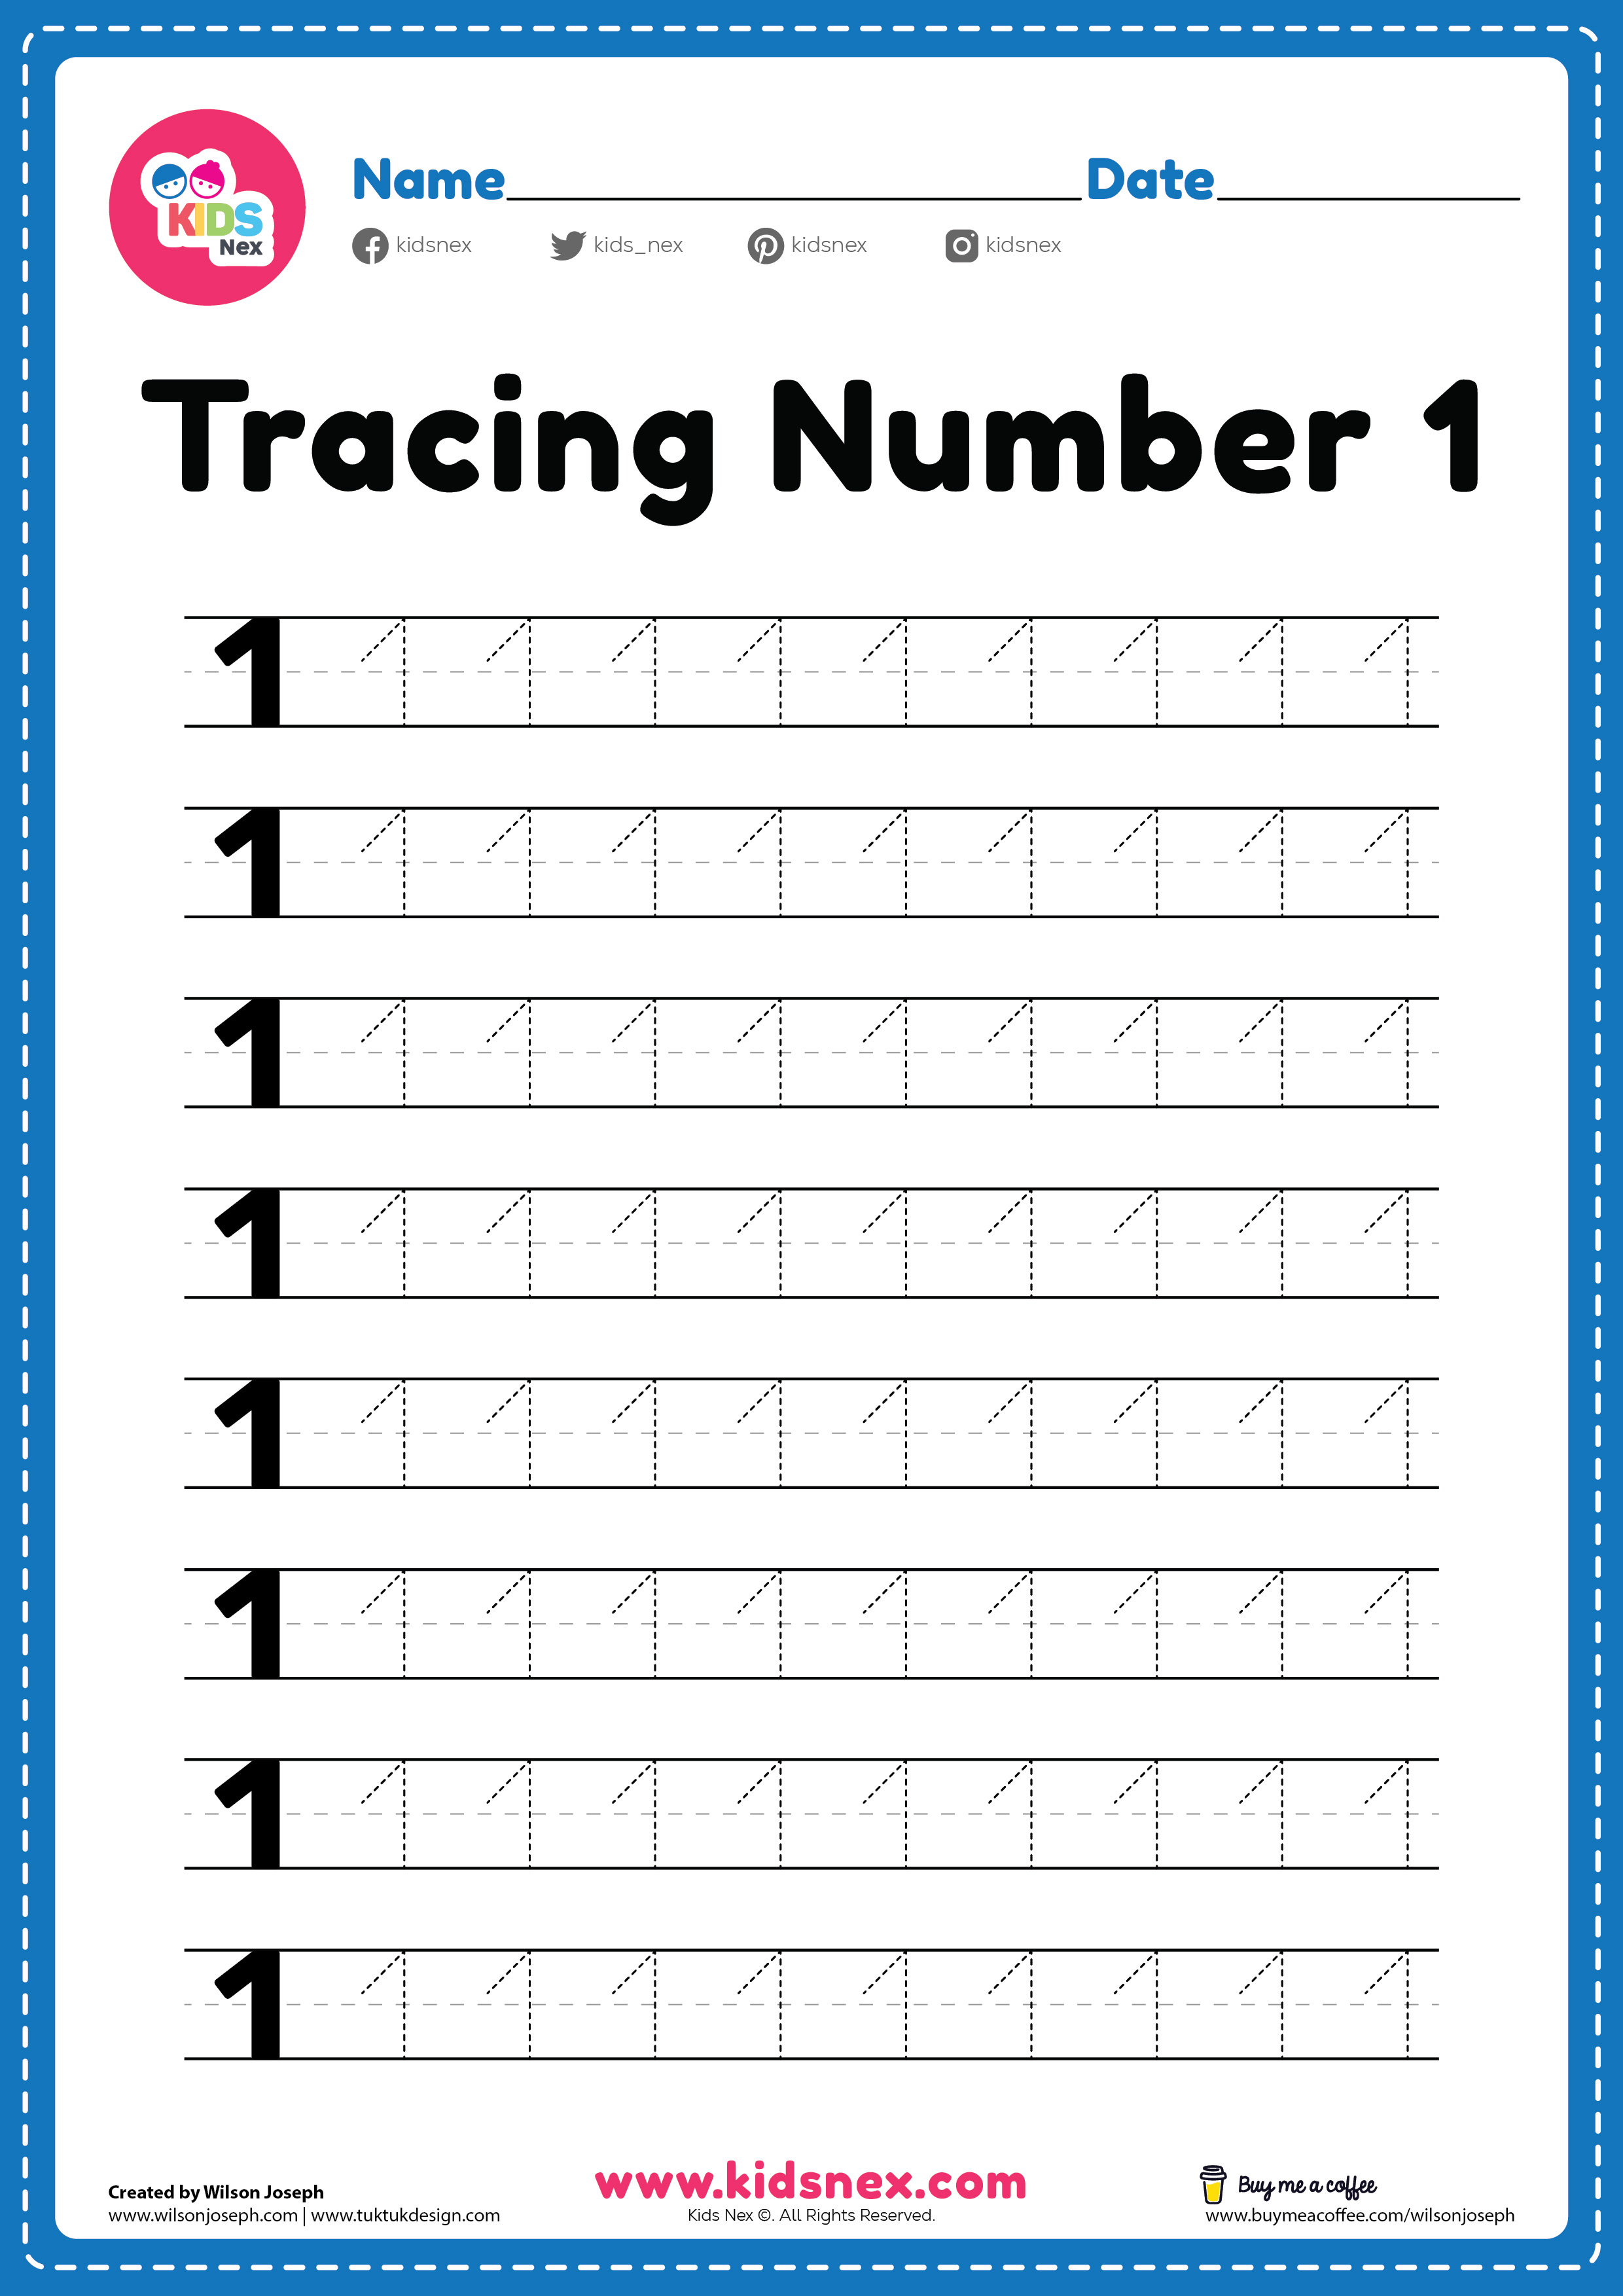 Worksheet for tracing number 1 for kindergarten and preschool kids